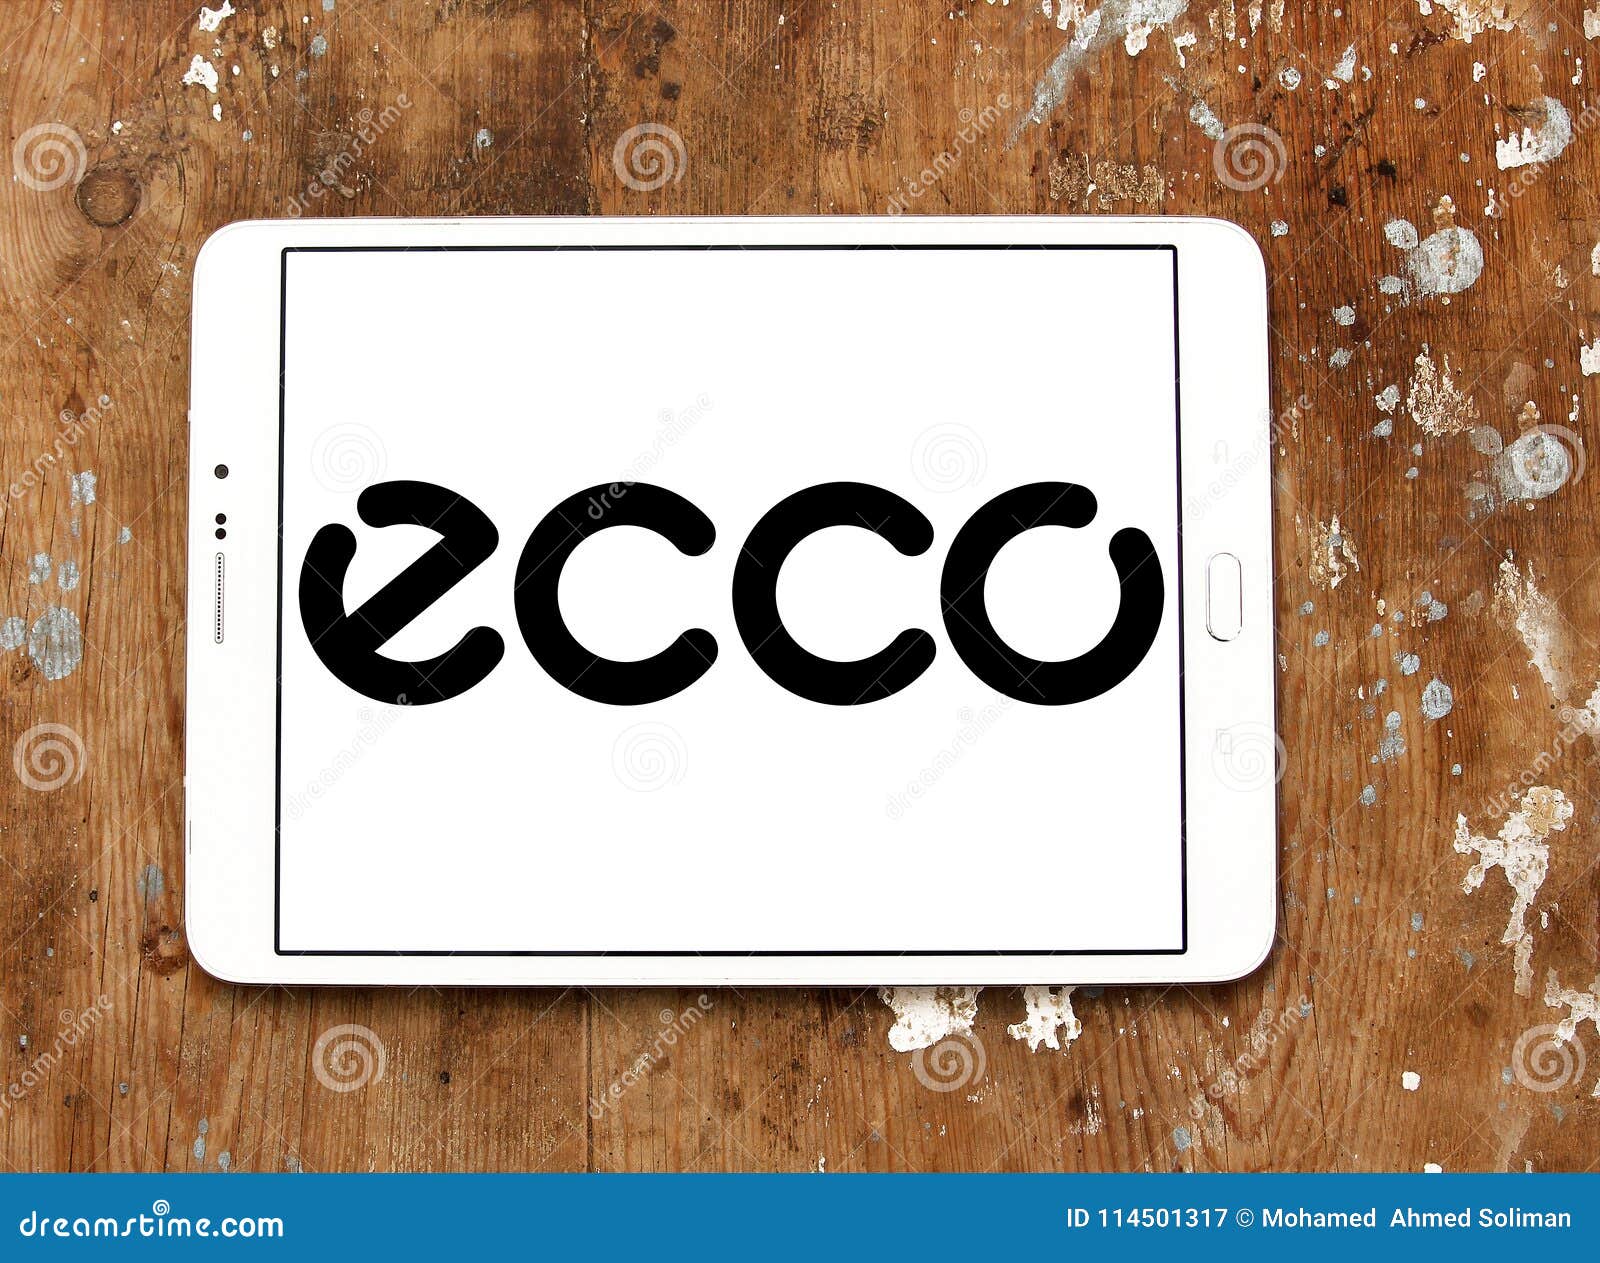 Ecco Company Stock Photos - Free & Stock Photos from